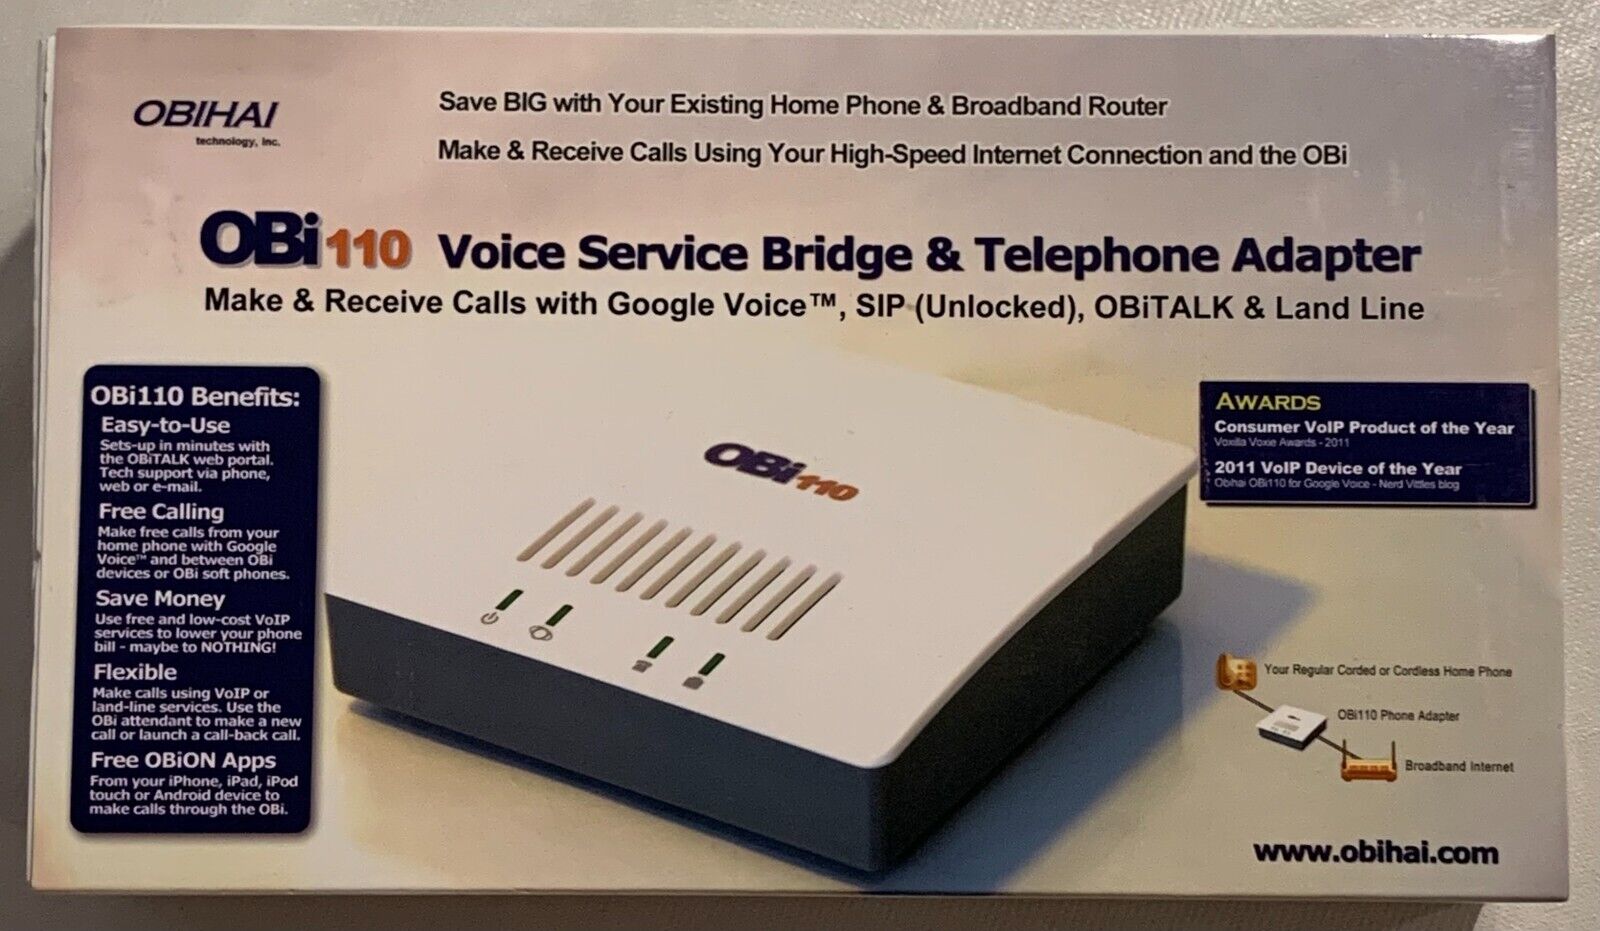 OBIHAI Obi110 Voice Service Bridge & Telephone Adapter